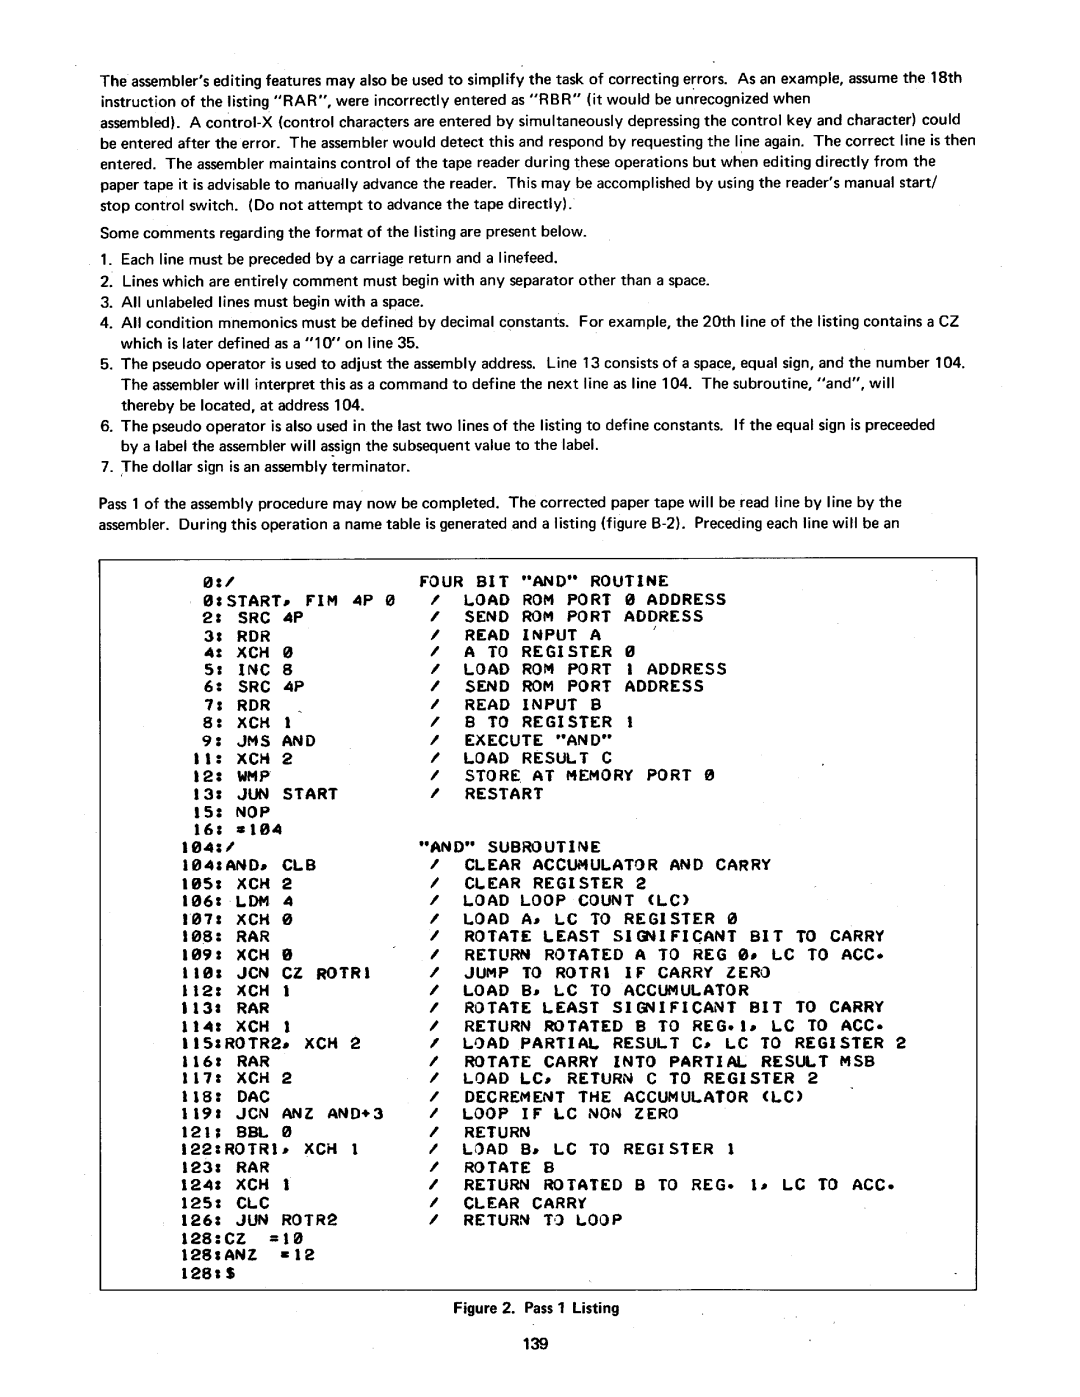 Intel MCS-4 manual 